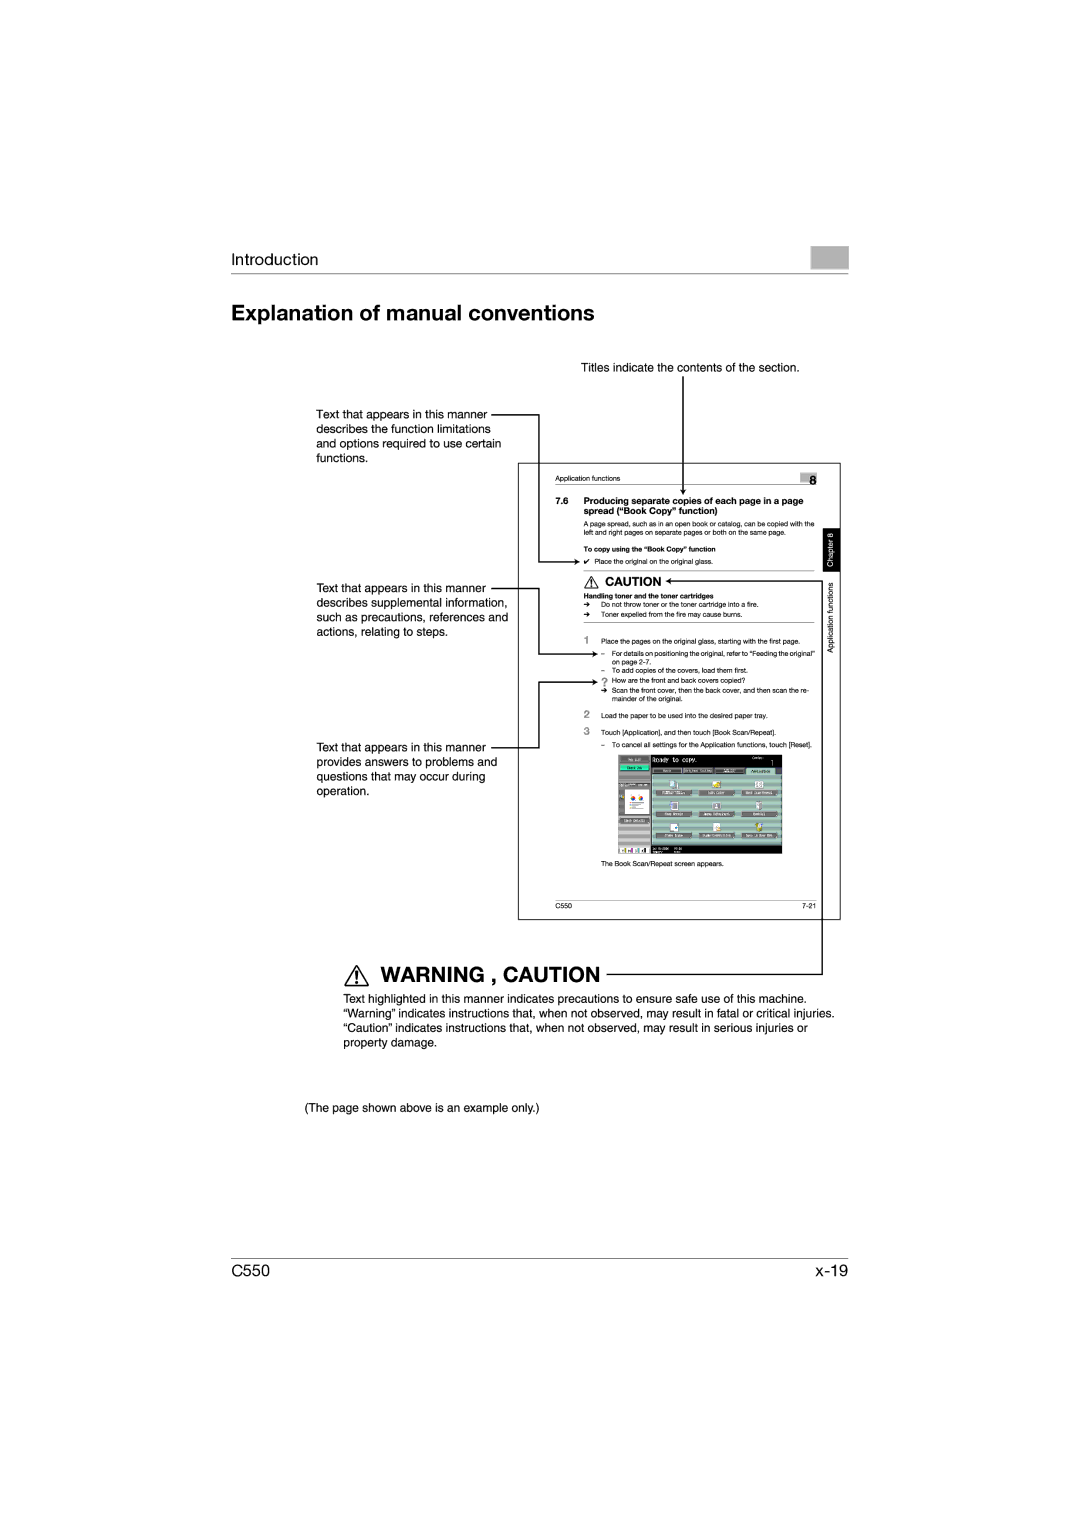 Konica Minolta C550 Explanation of manual conventions 